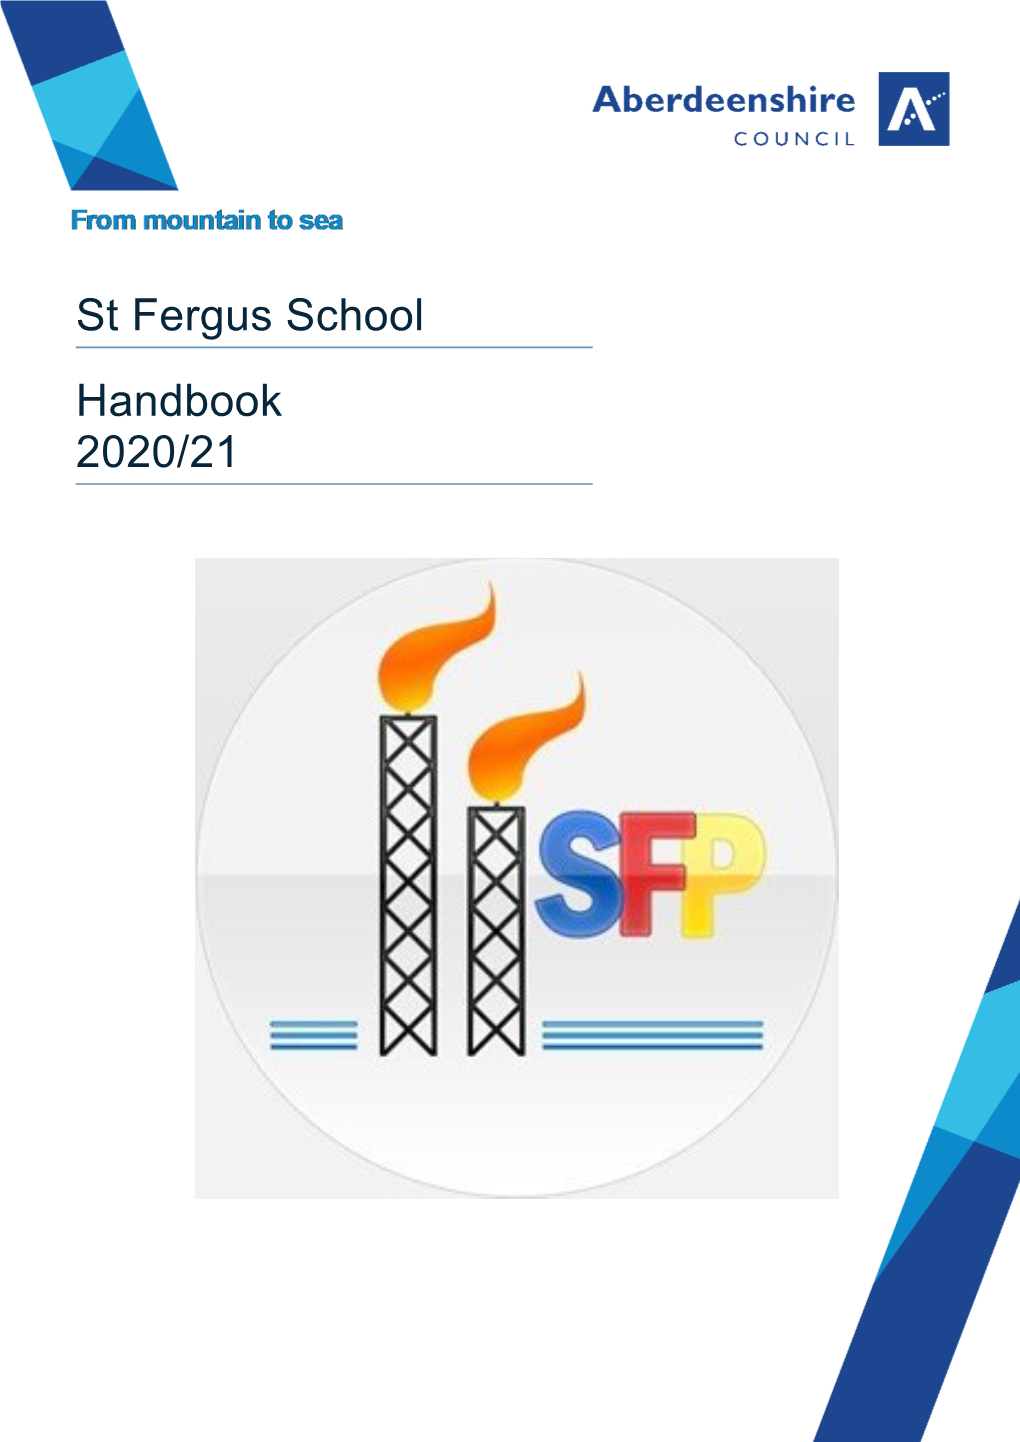 St Fergus School Handbook 2020/21